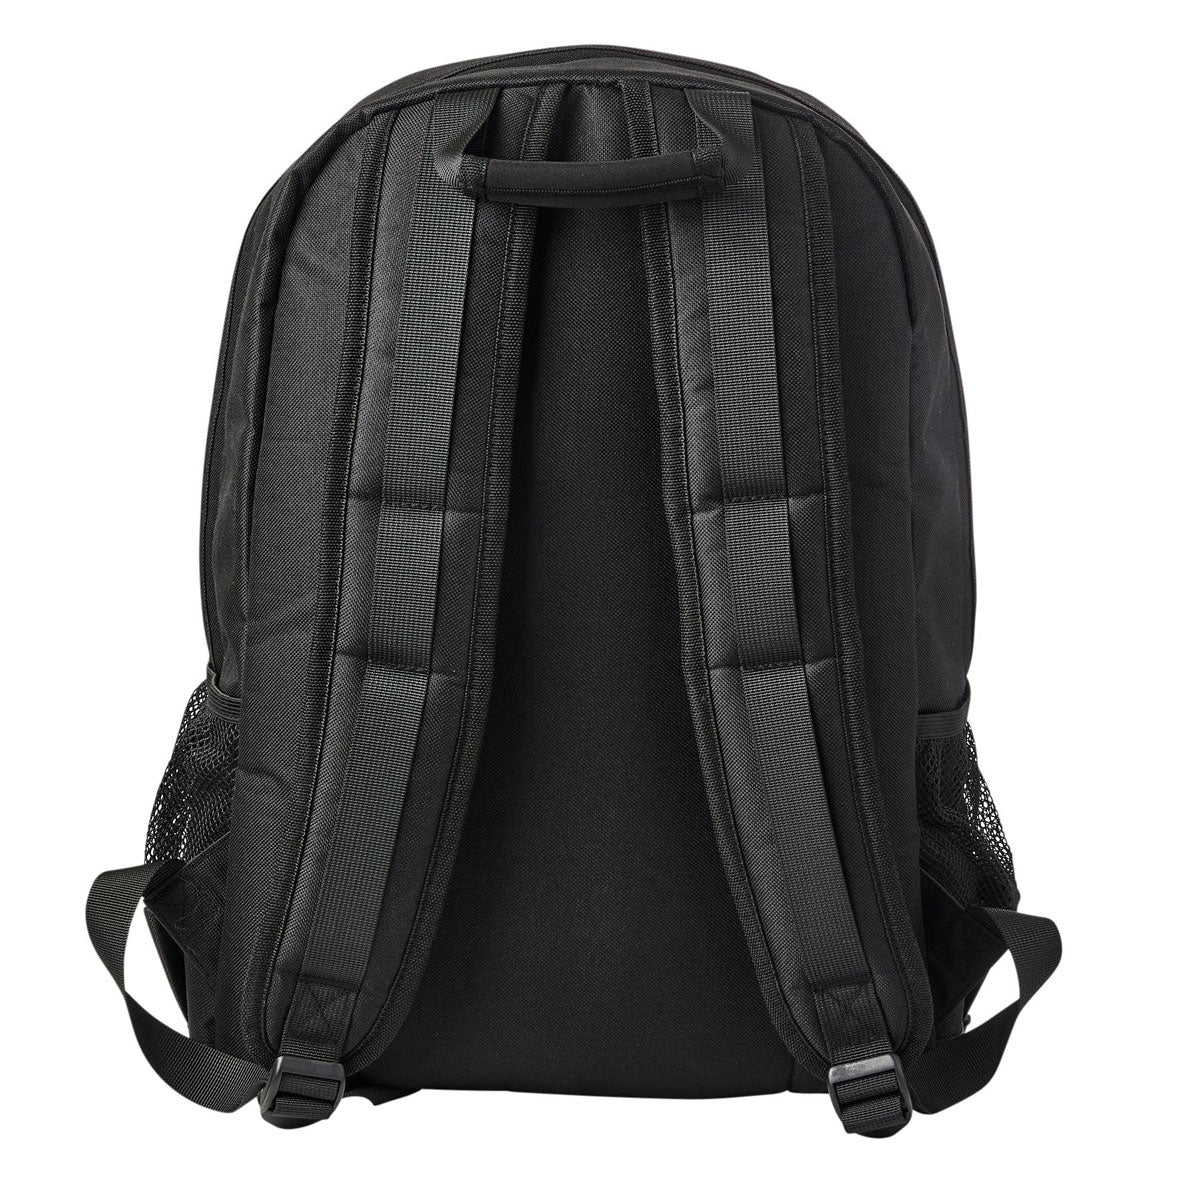 Santa Cruz Global Flame Dot Backpack - Black image 2